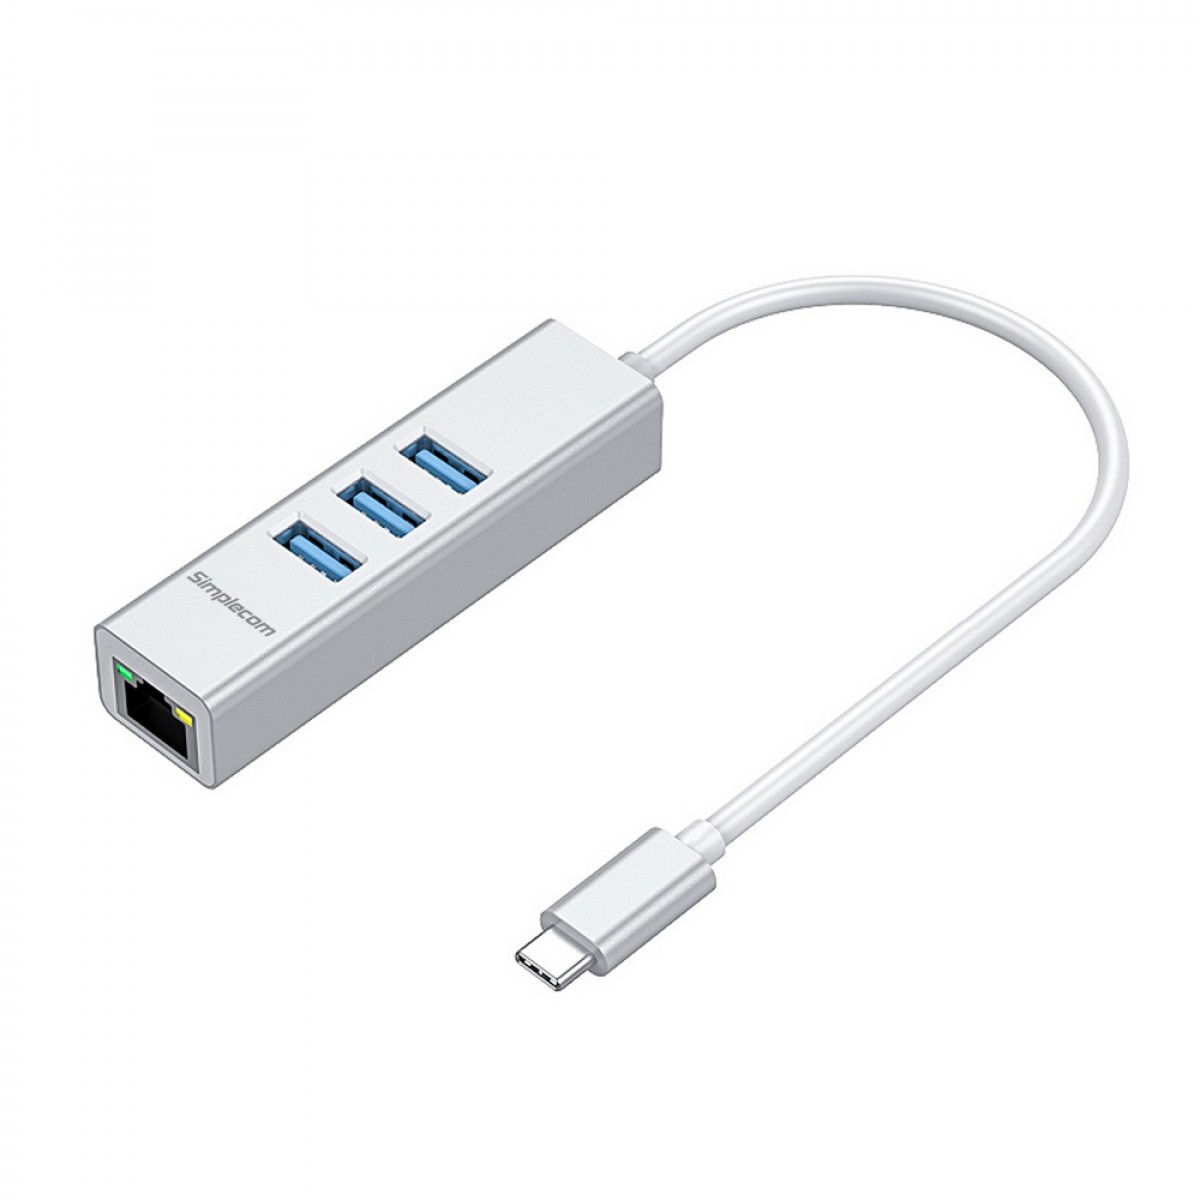  Aluminium USB-C Type-C to 3 Port USB HUB with Gigabit Ethernet Adapter Silver  